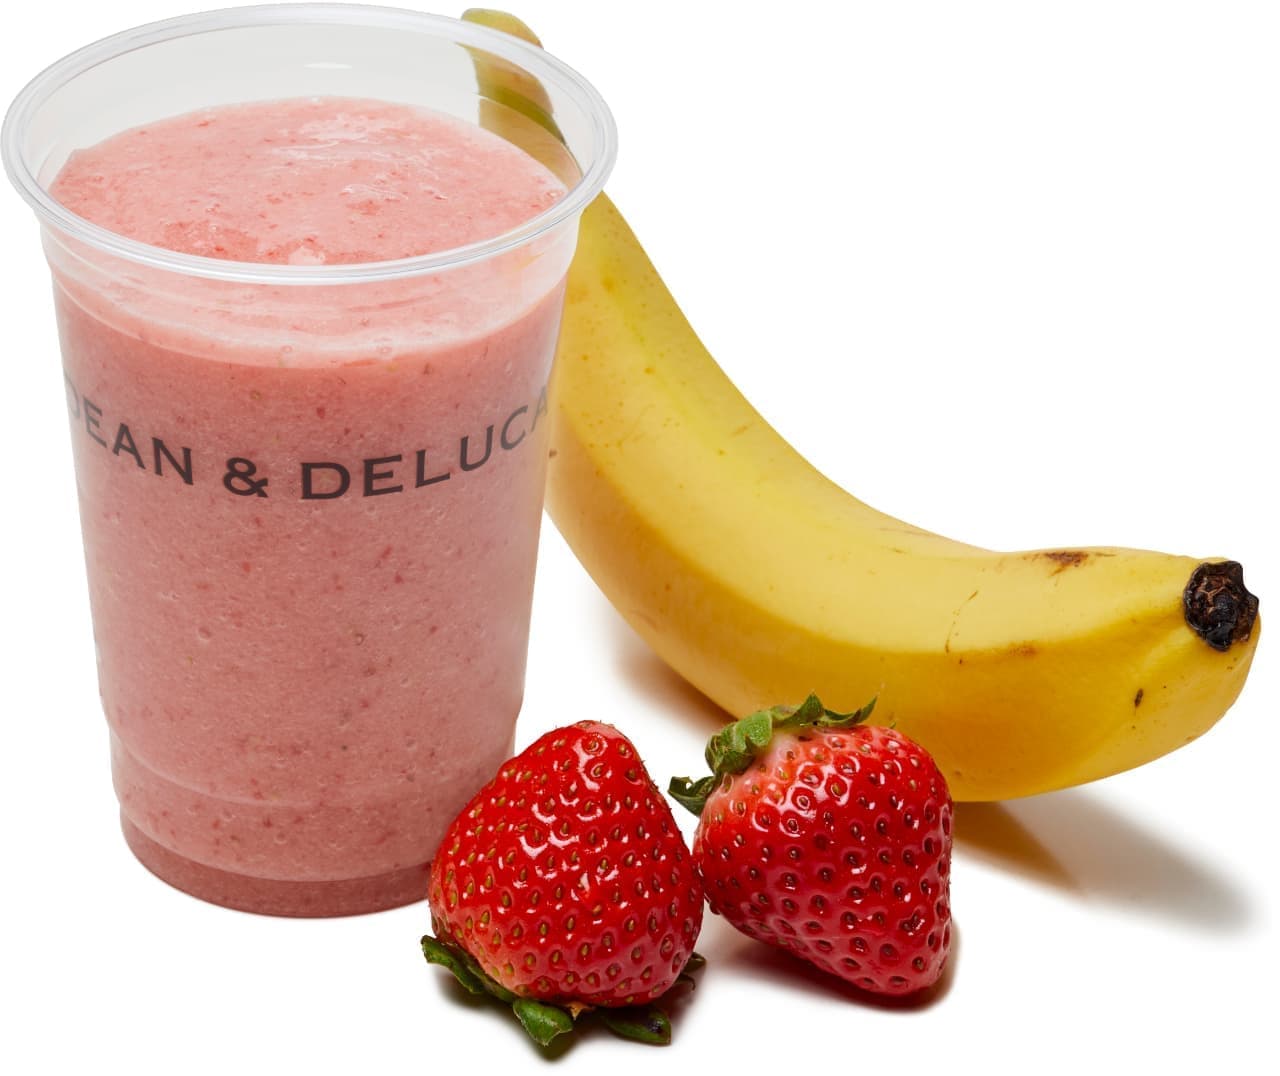 DEAN & DELUCA "Strawberry Banana Juice